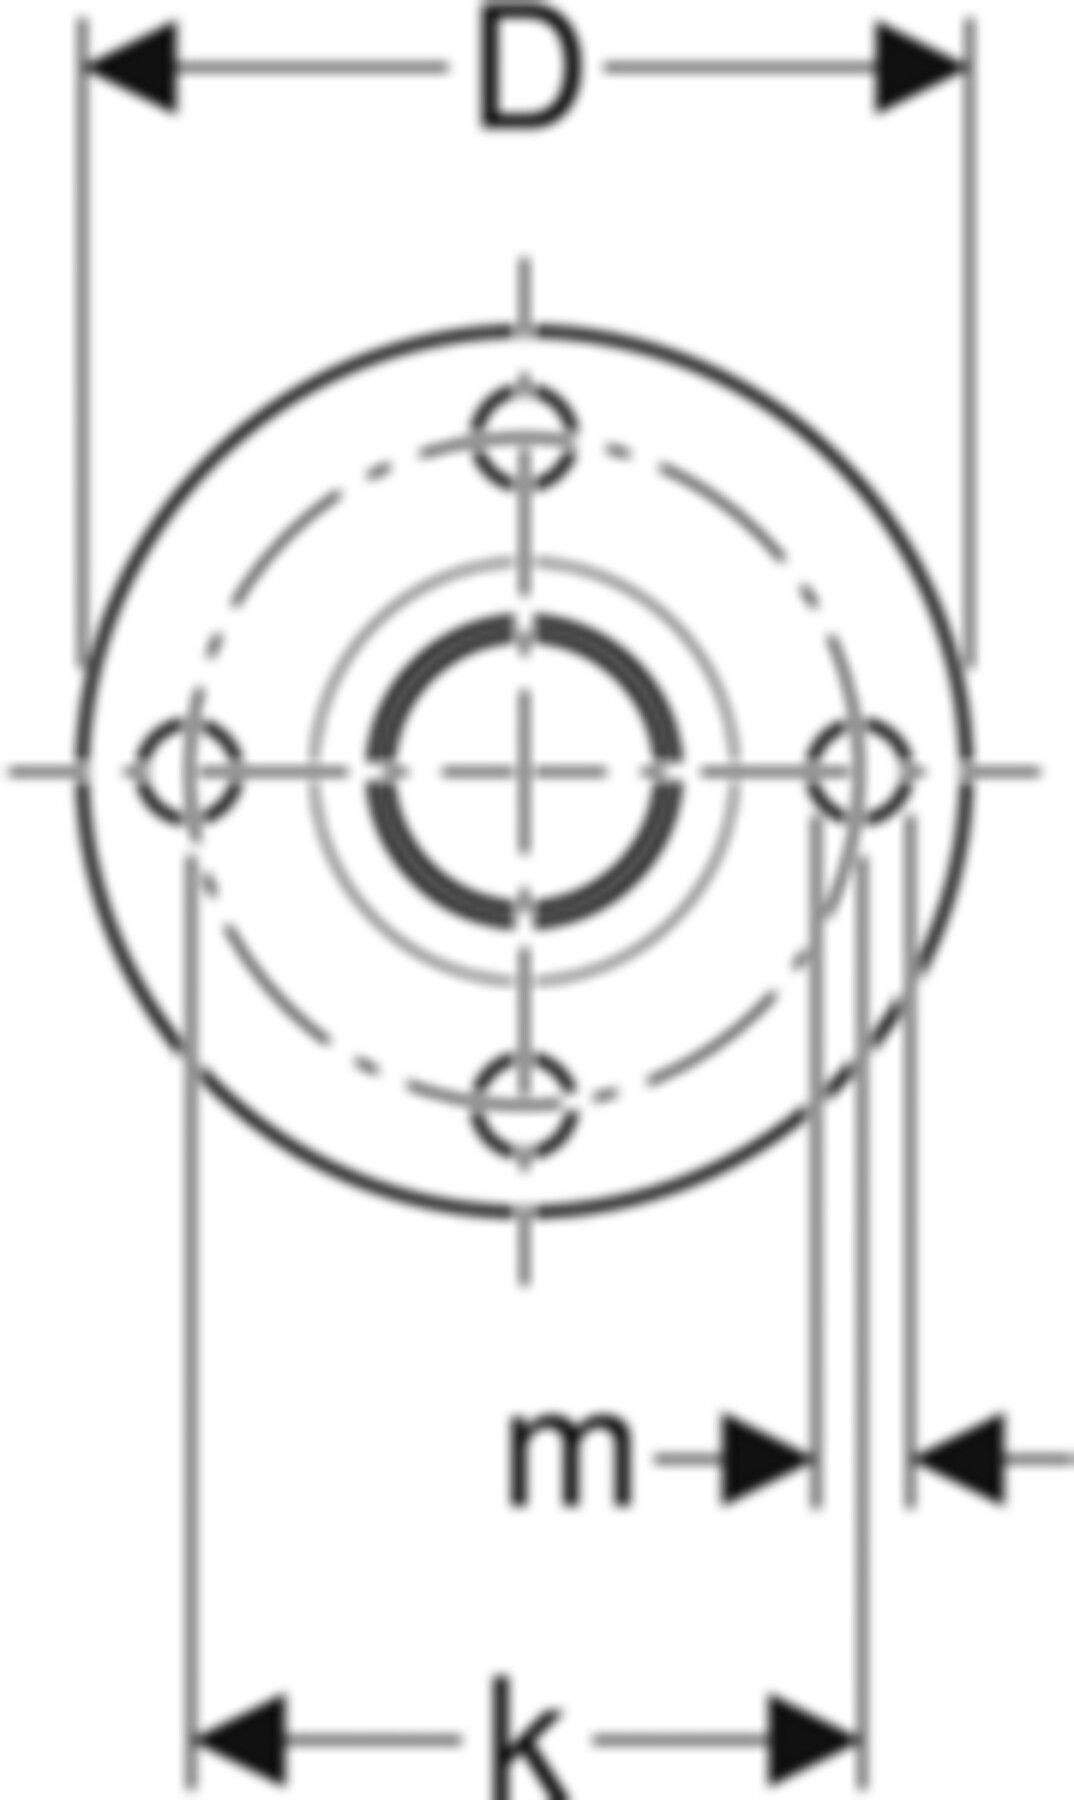 Flansch m/Steckende PN10/16 88.9mm 23790 - Mapress-Heizung Supersize-Formstücke